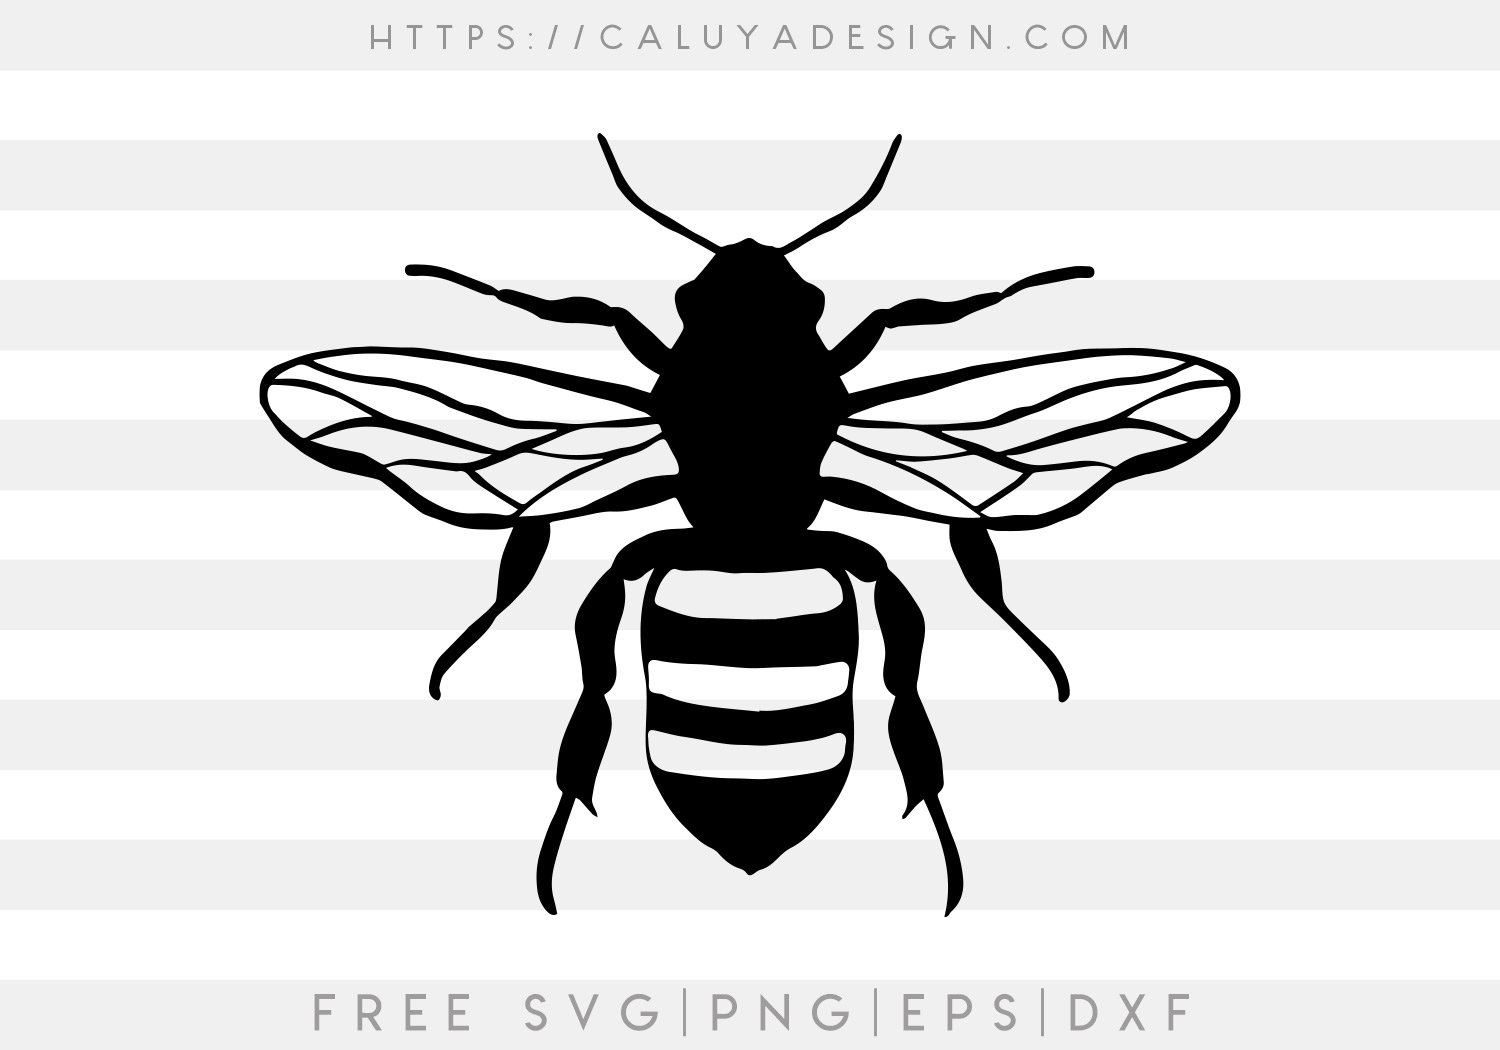 Download Free Vintage Bee Svg Png Eps Dxf By Caluya Design